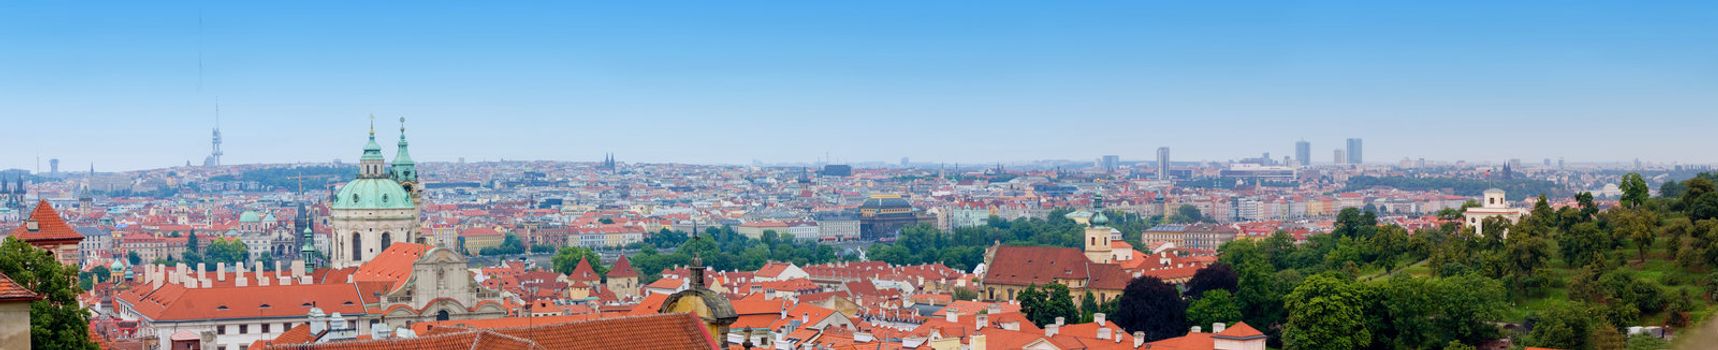 Prague panorama. View from Hradcany. 